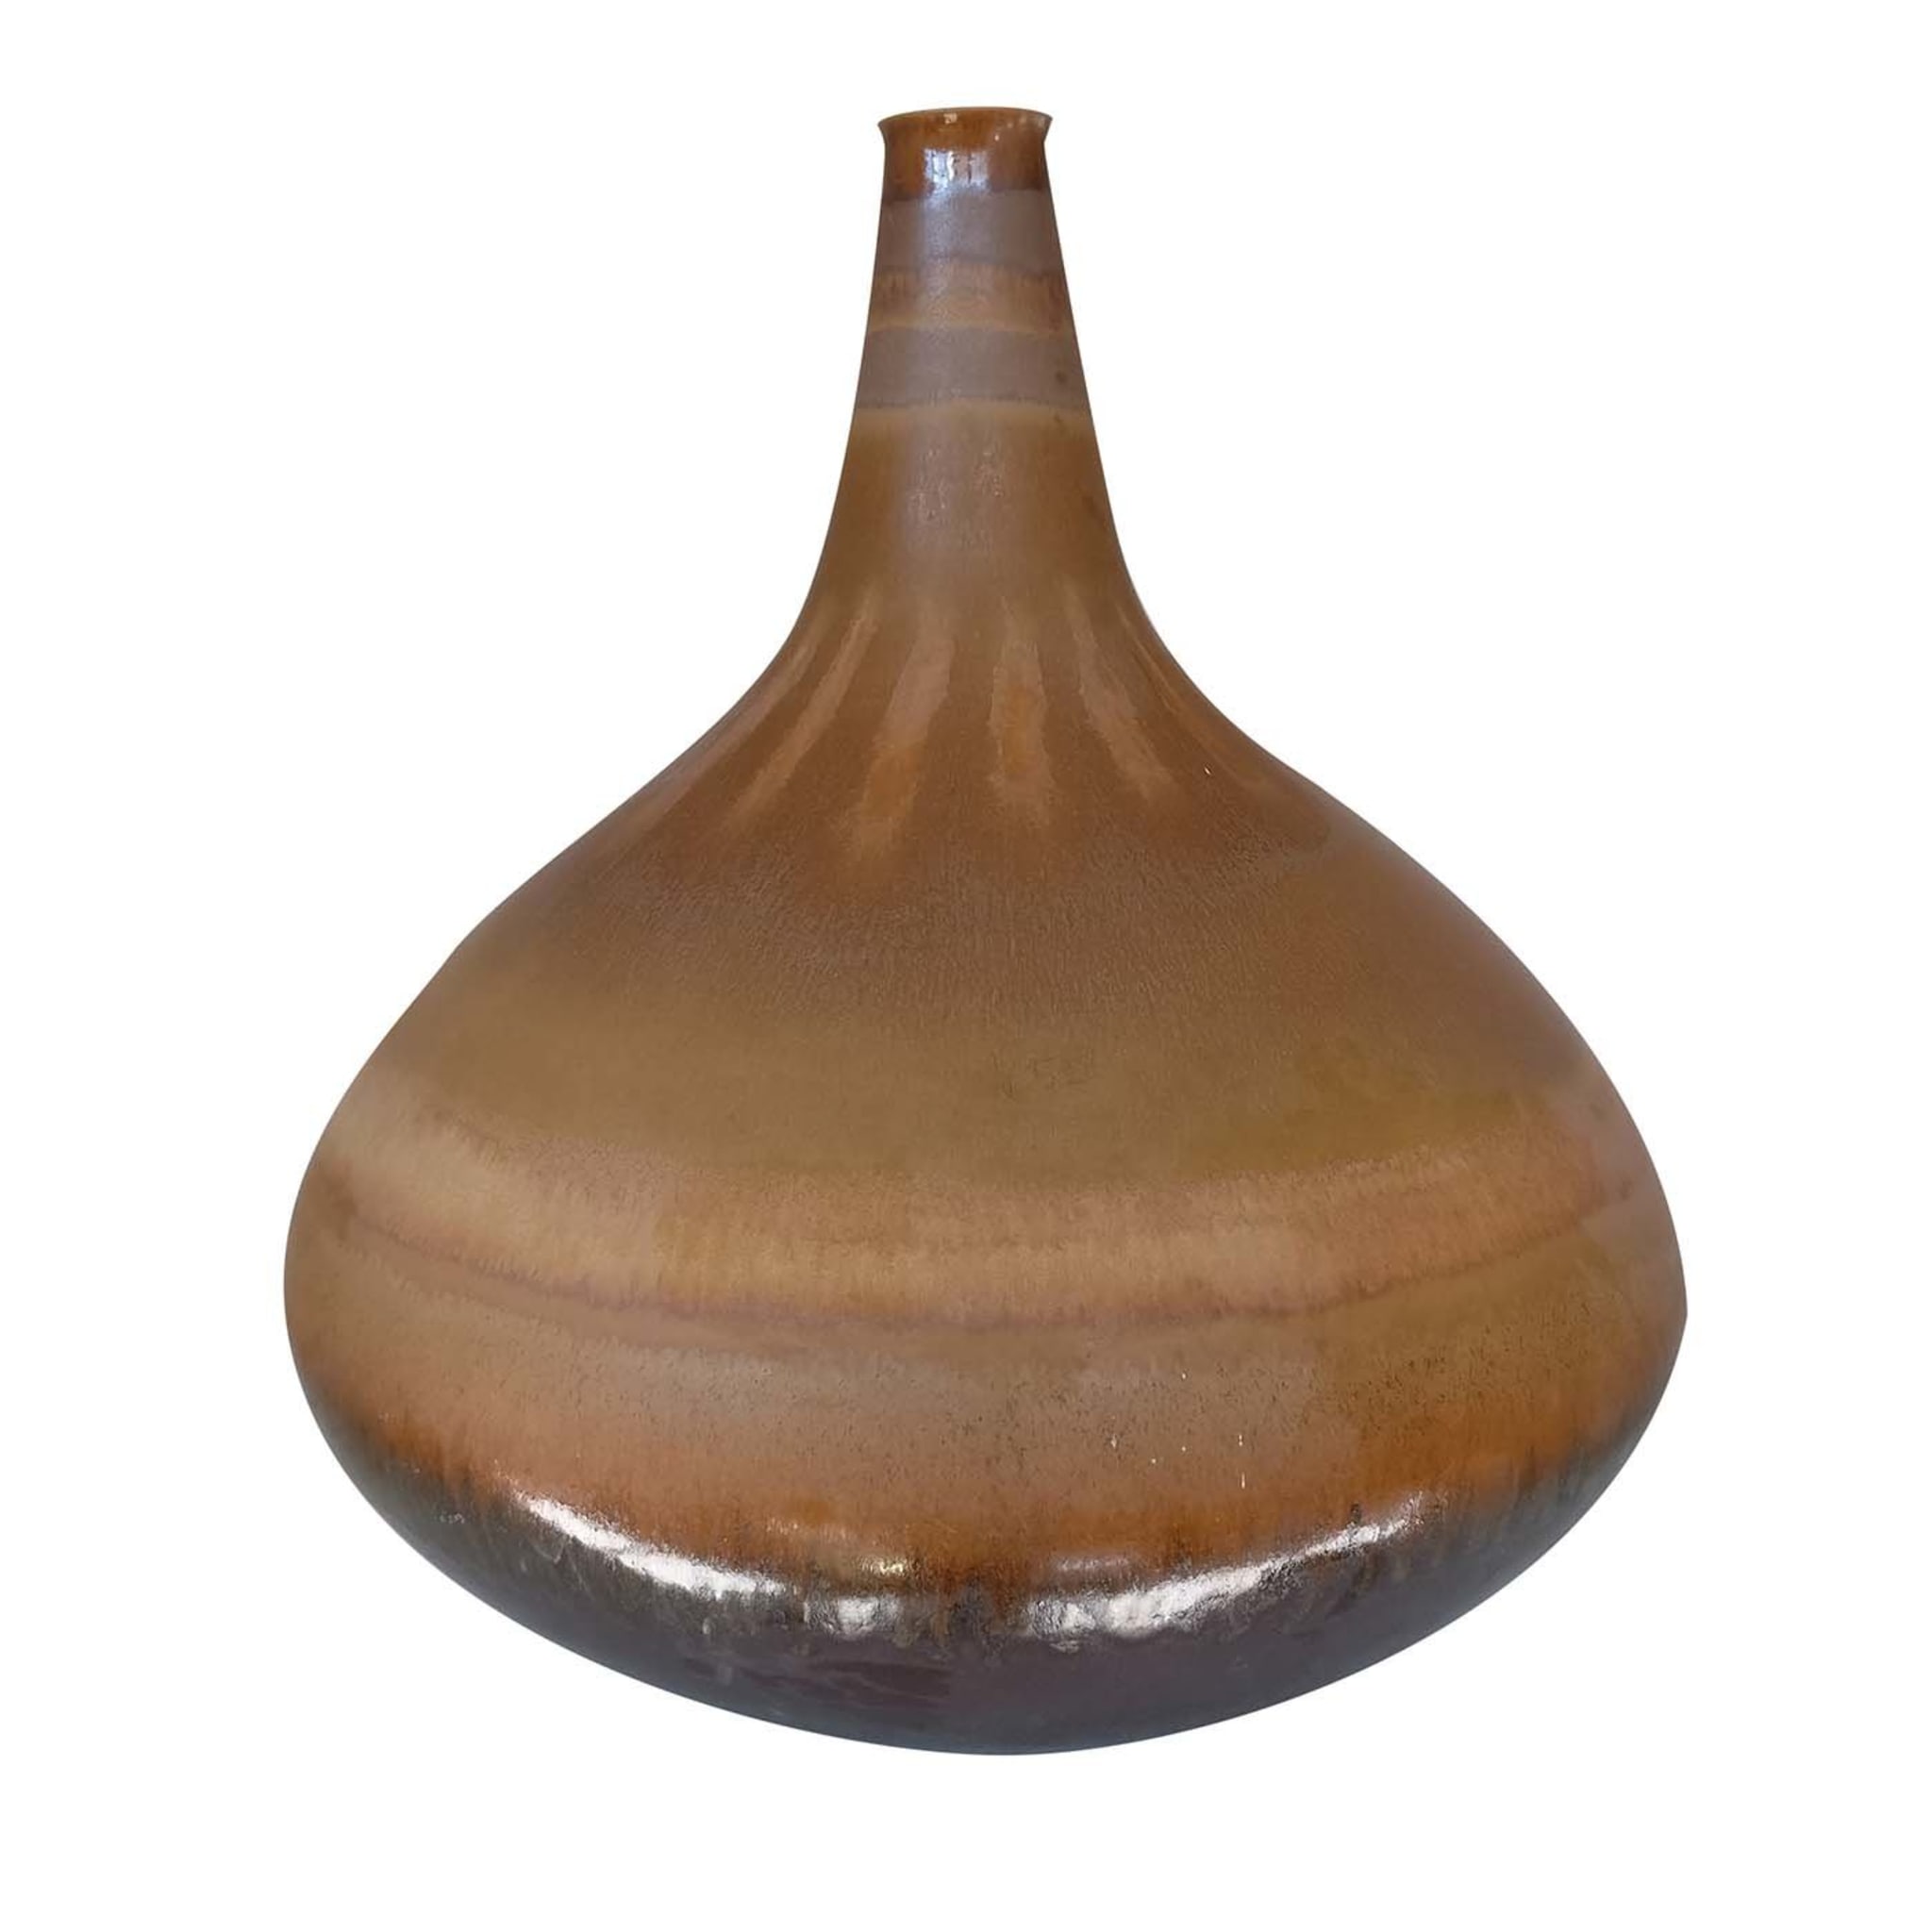 1980 Vintage Ampoule Vase by Santonocito Michelangiolo - Main view